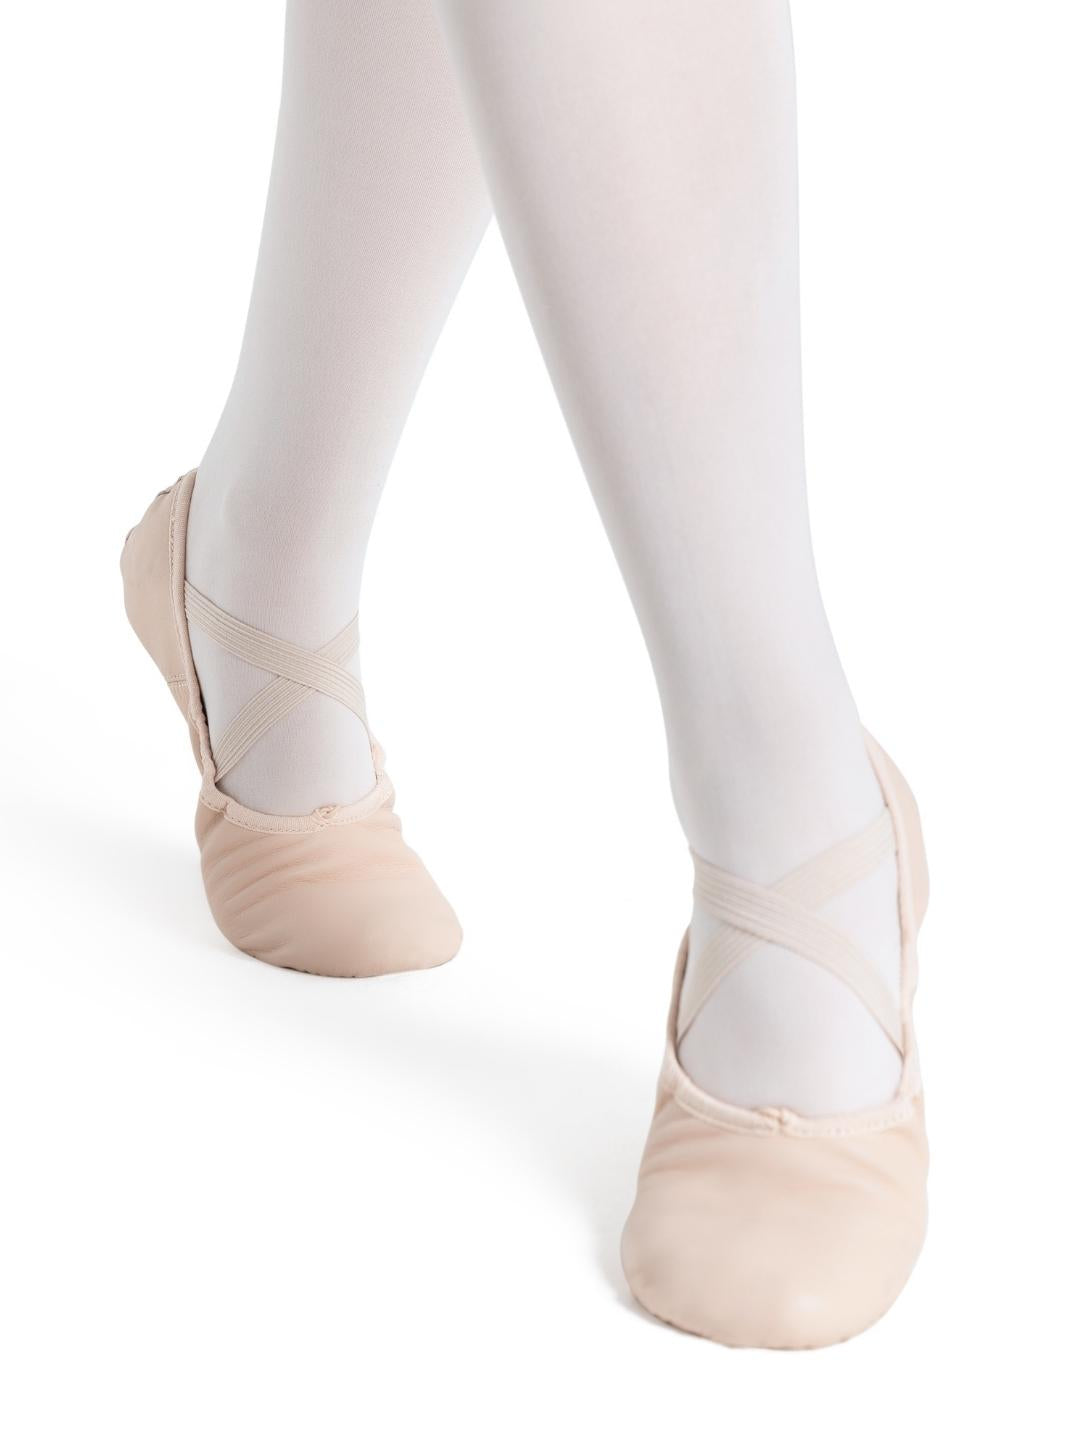 Capezio, Juliet 2027, Ballet Pink Leather